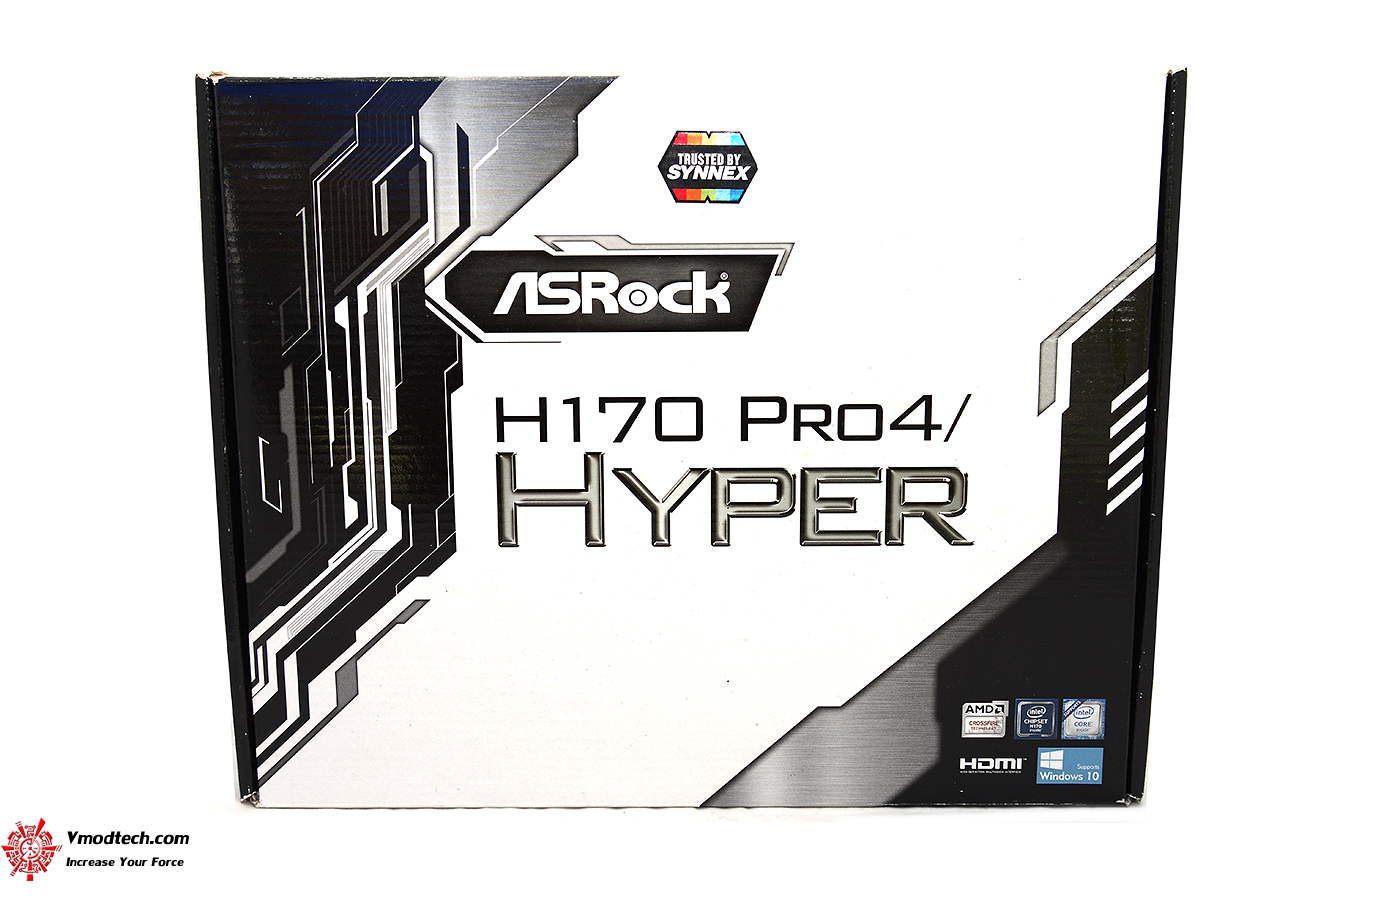 dsc 2181 ASRock H170 Pro4/Hyper Review